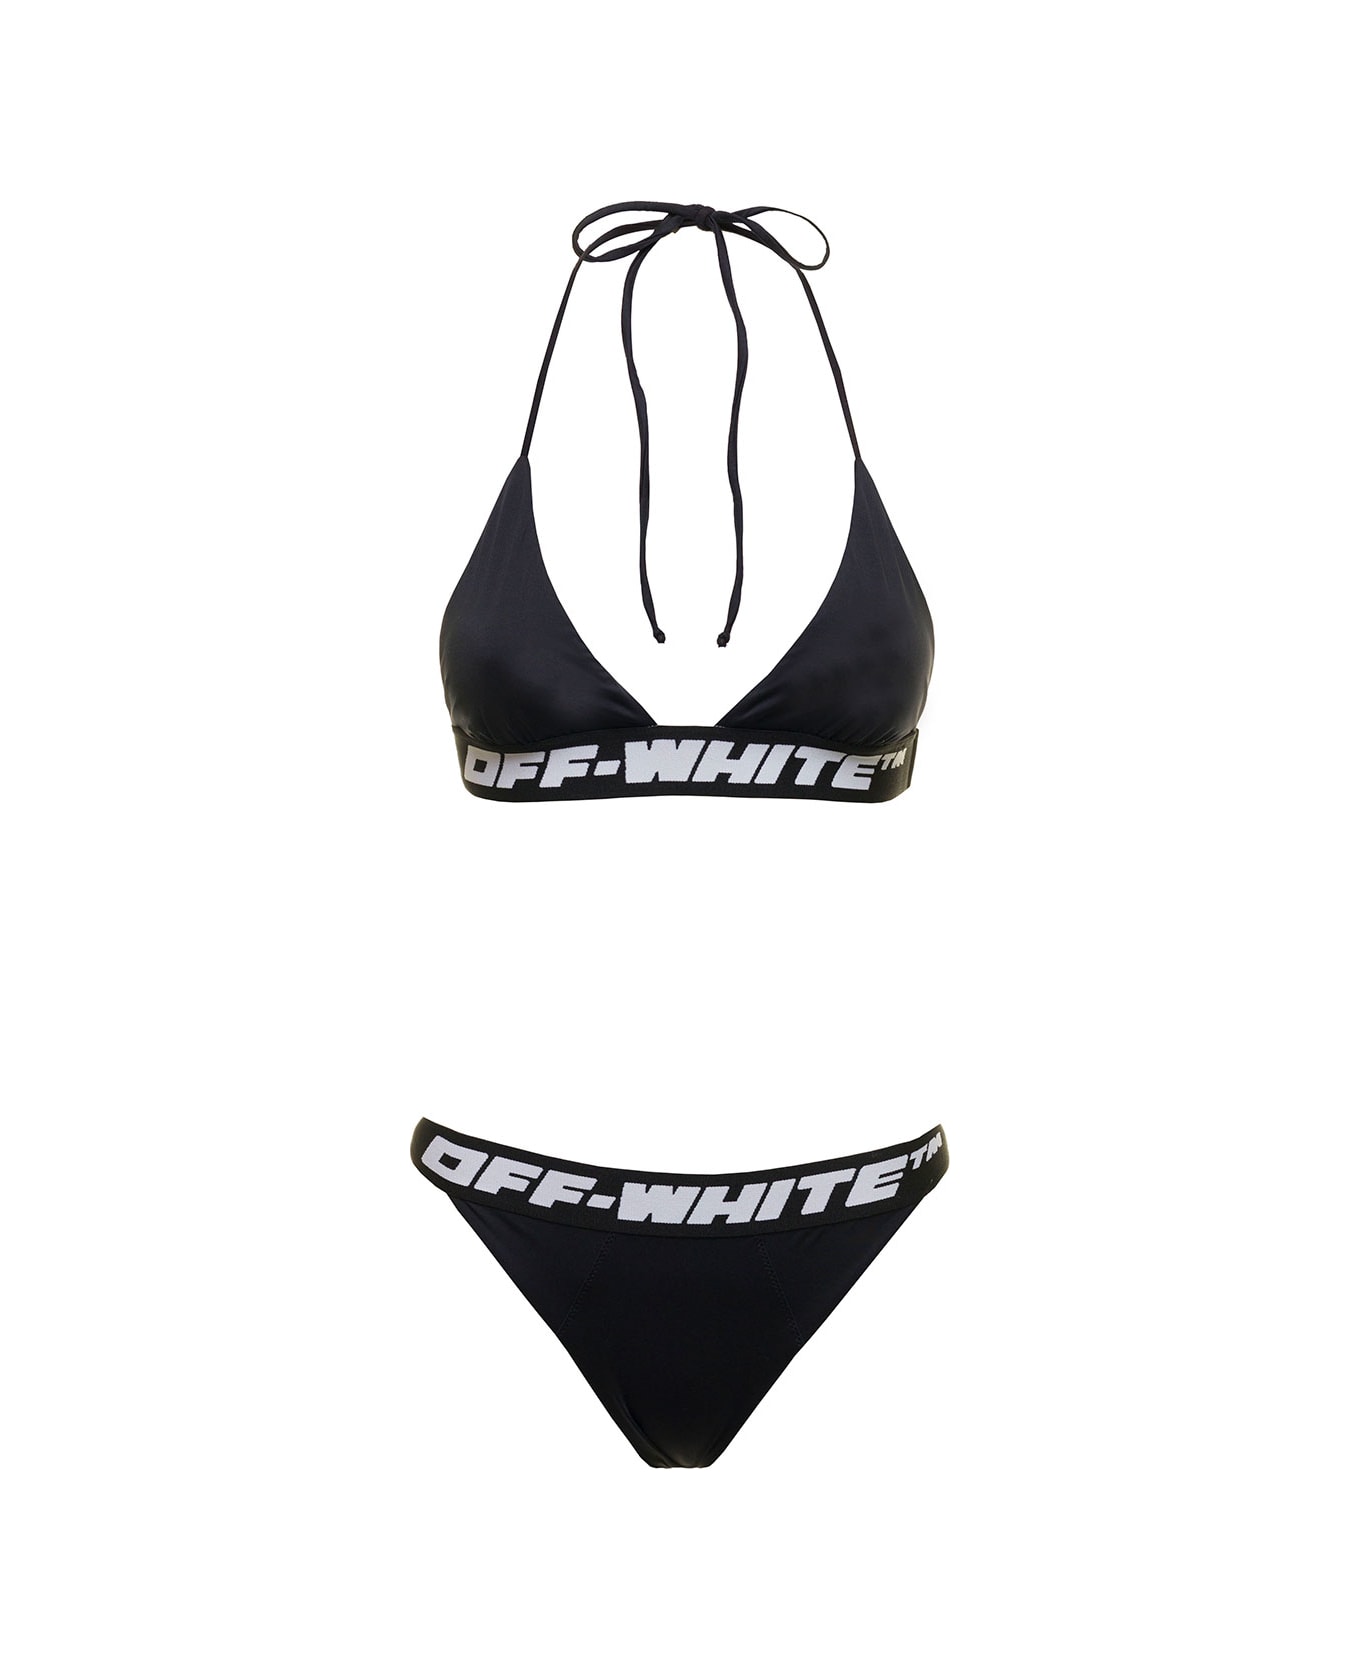 Off-White Off White Woman's Black Strech Fabric Bikini With  Logo - Black